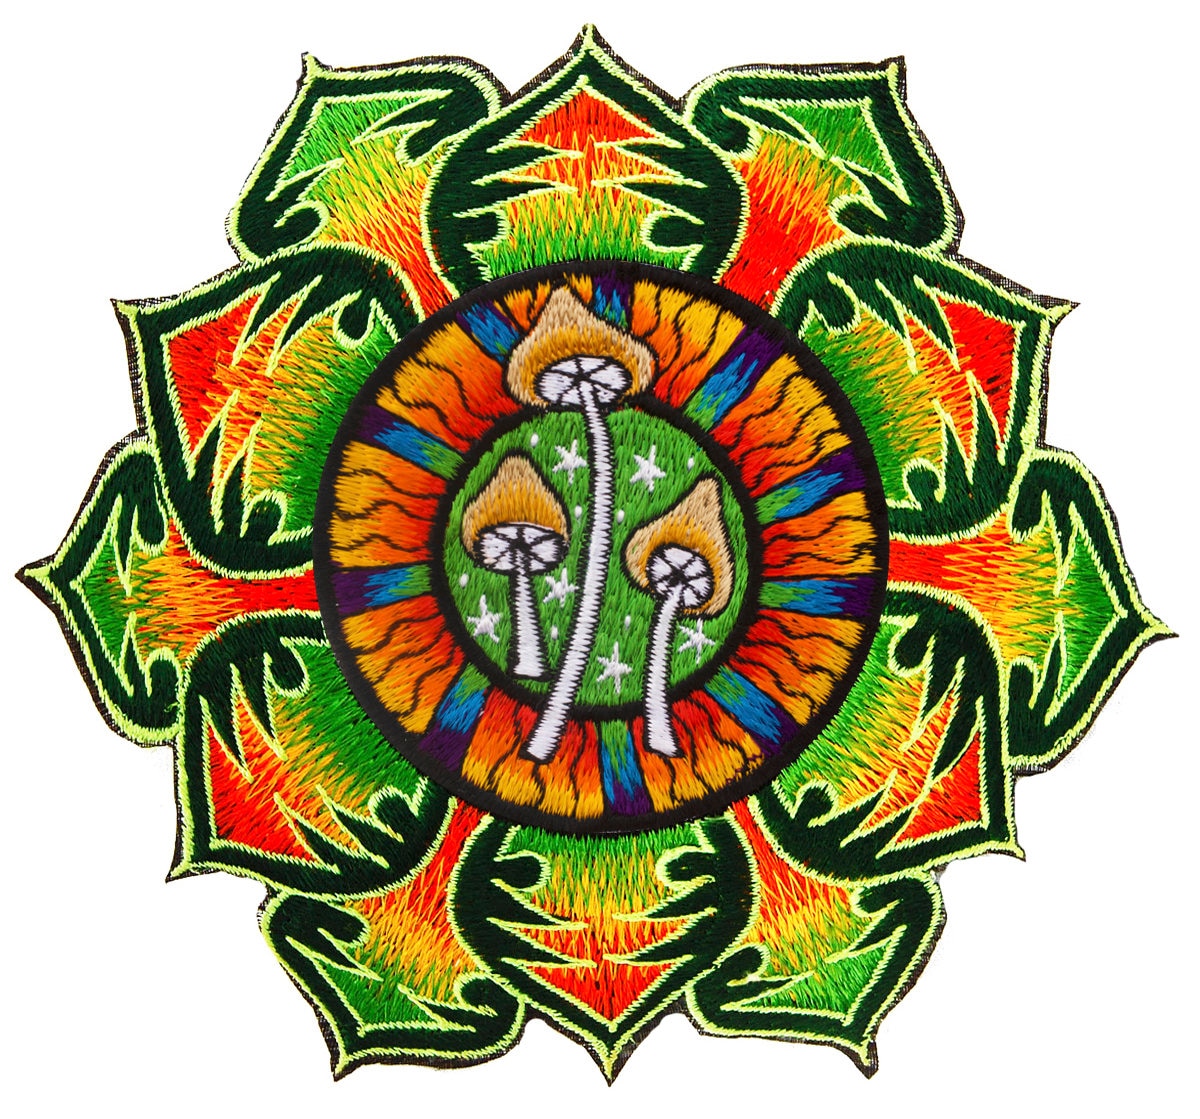 Green Magic Mushroom T-Shirt Shrooms Mandala handmade embroidery yantra goa tshirt psychedelic psy trance shirt Mckenna mandala